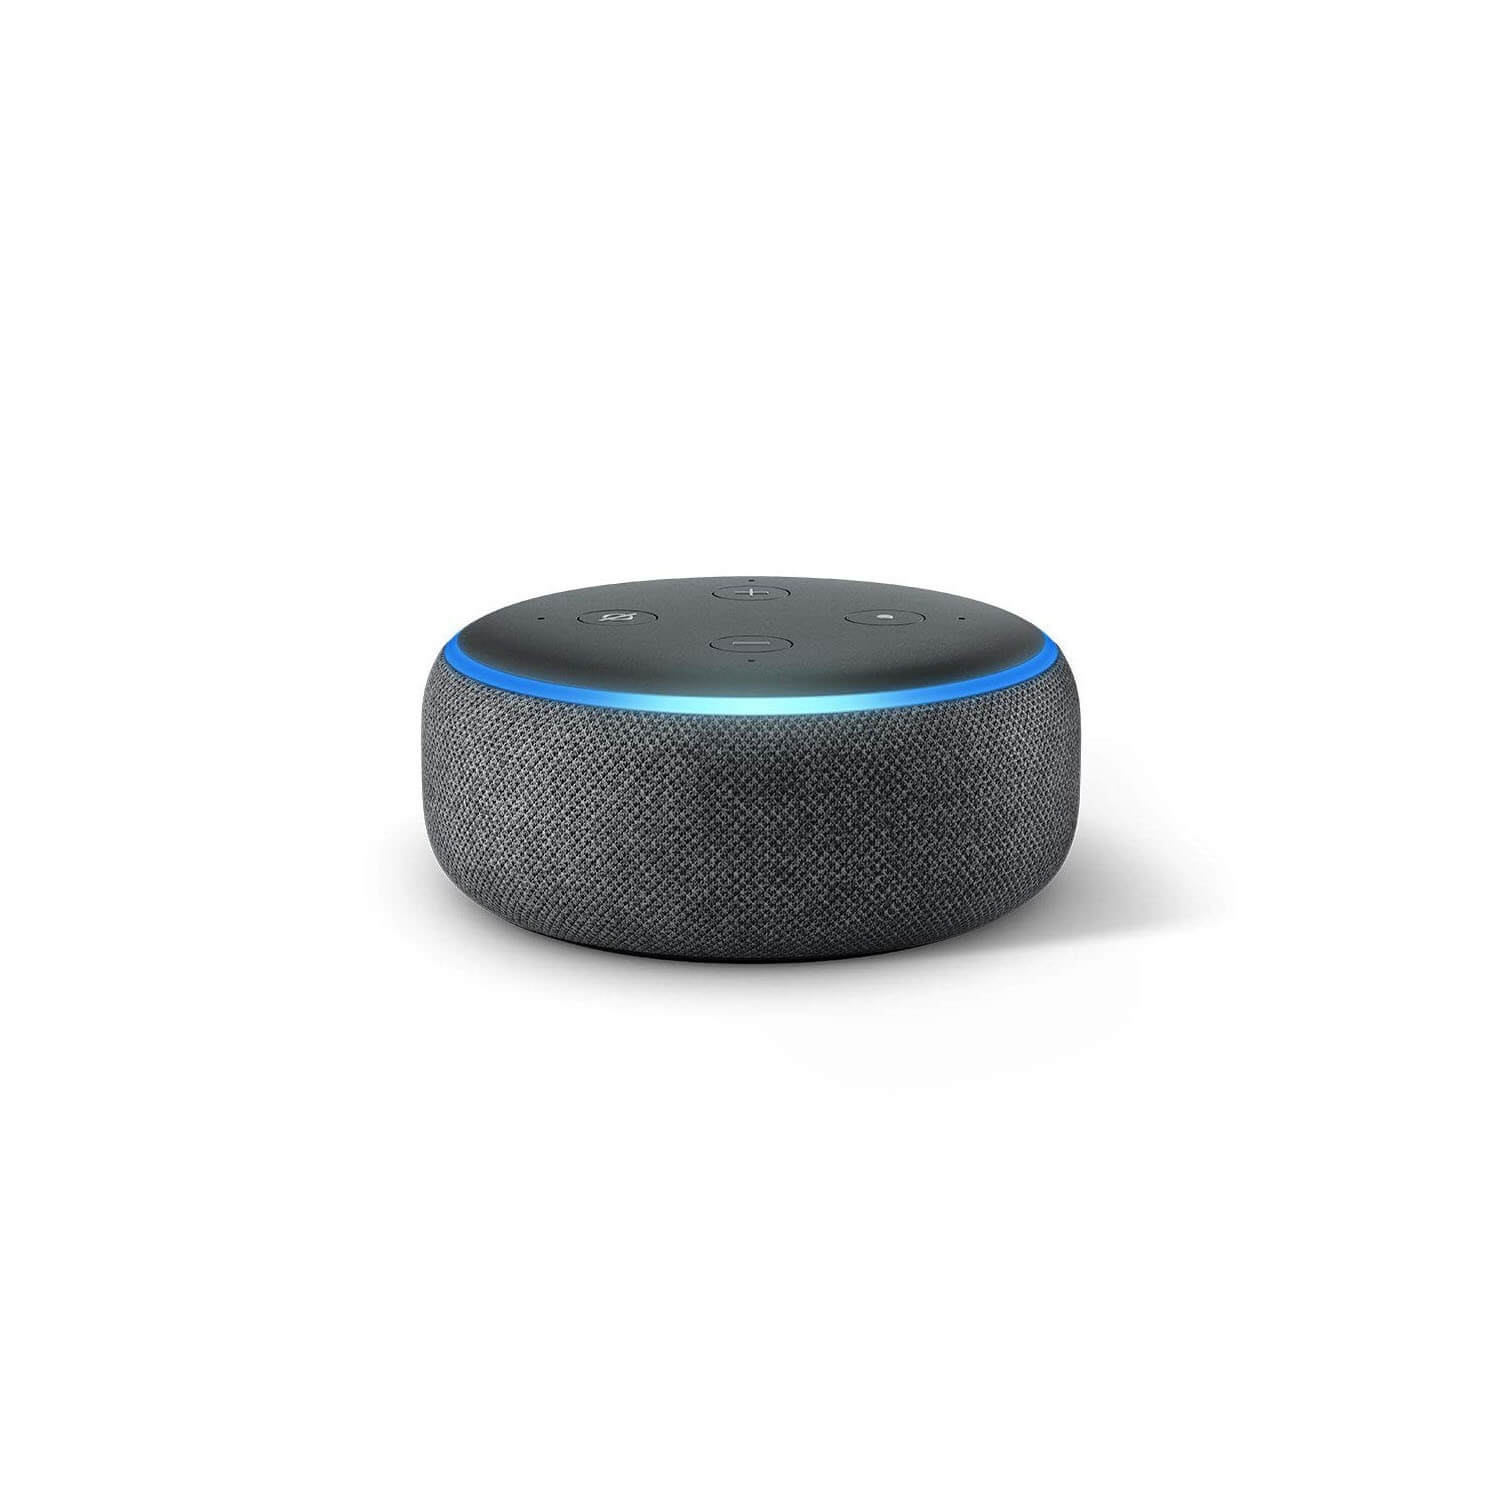 Enceinte Echo Dot connectée avec Alexa - Third Party